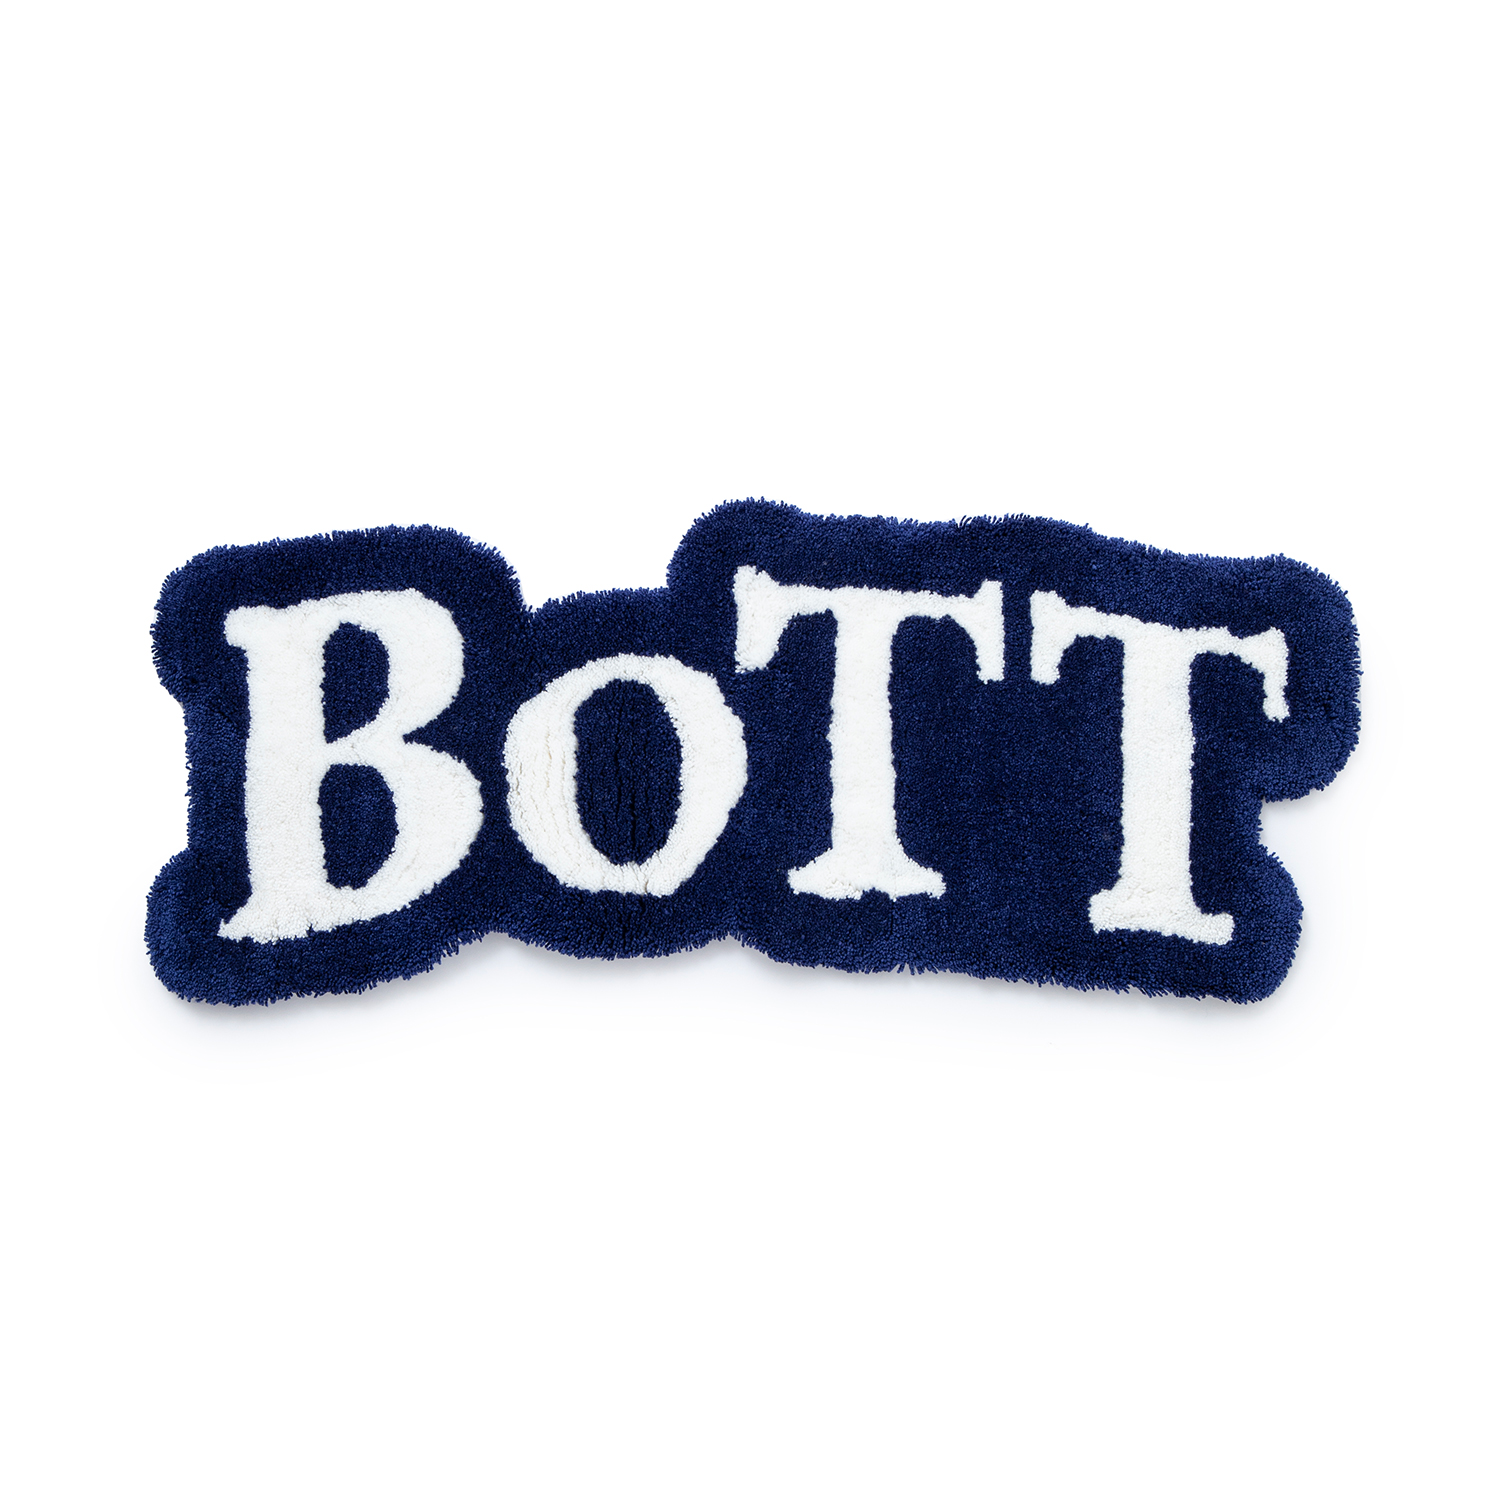 BoTT OG Logo Necklace